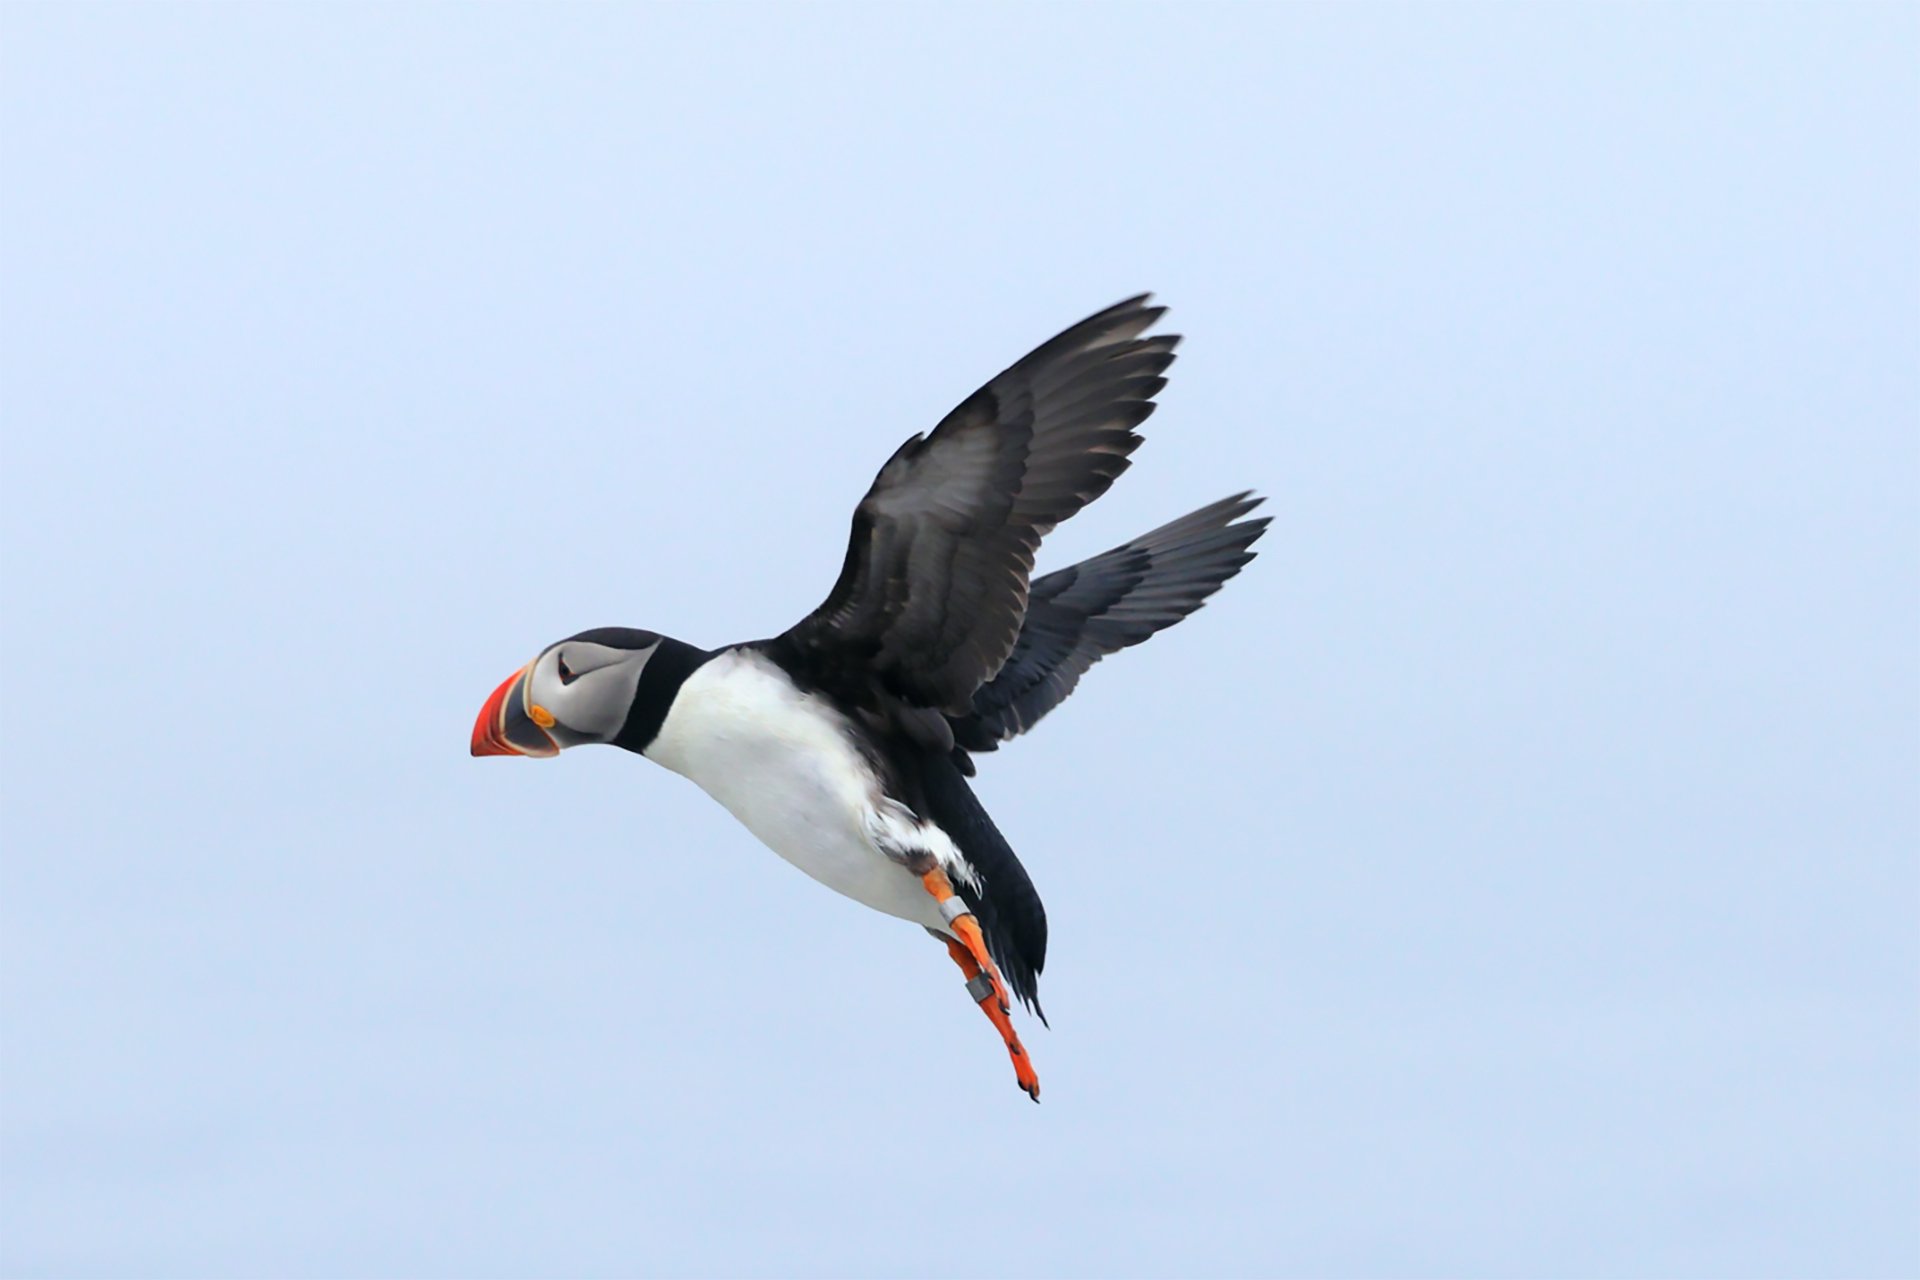 puffin in flight against a pale blue sky